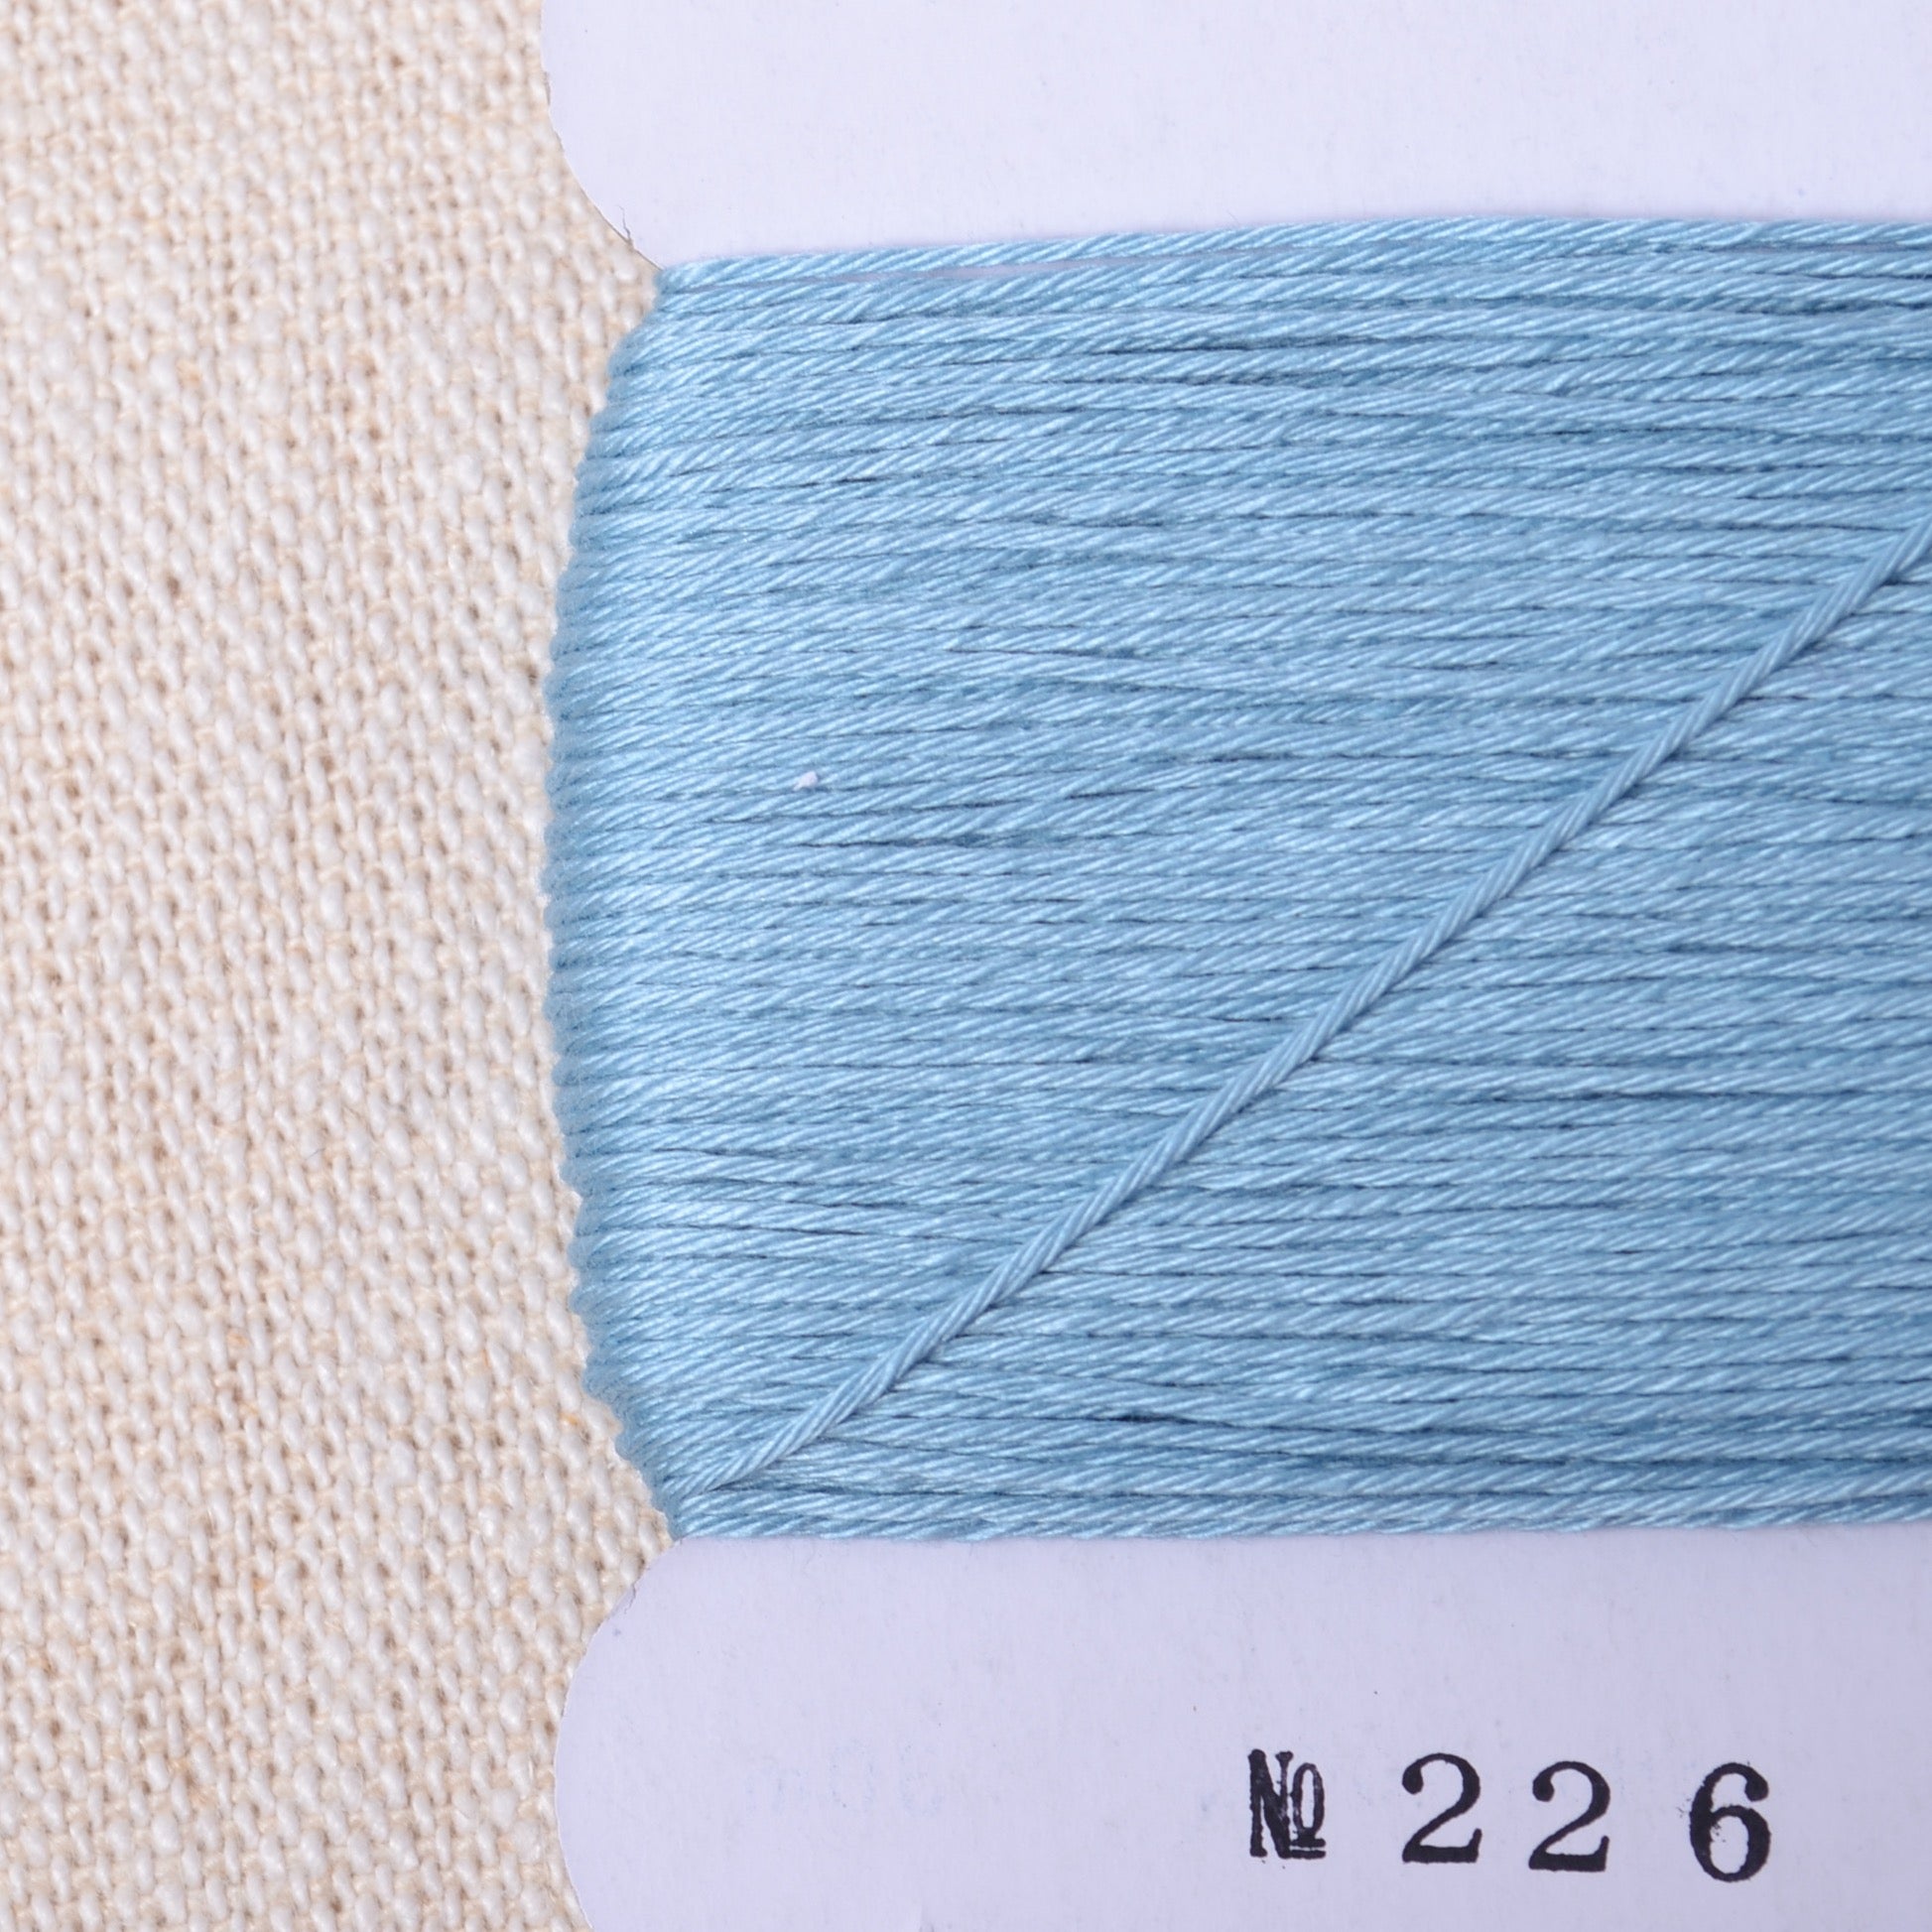 Daruma Yume Fukin Pre-Printed Sashiko Fabric - Navy Blue - Wools Of Nations